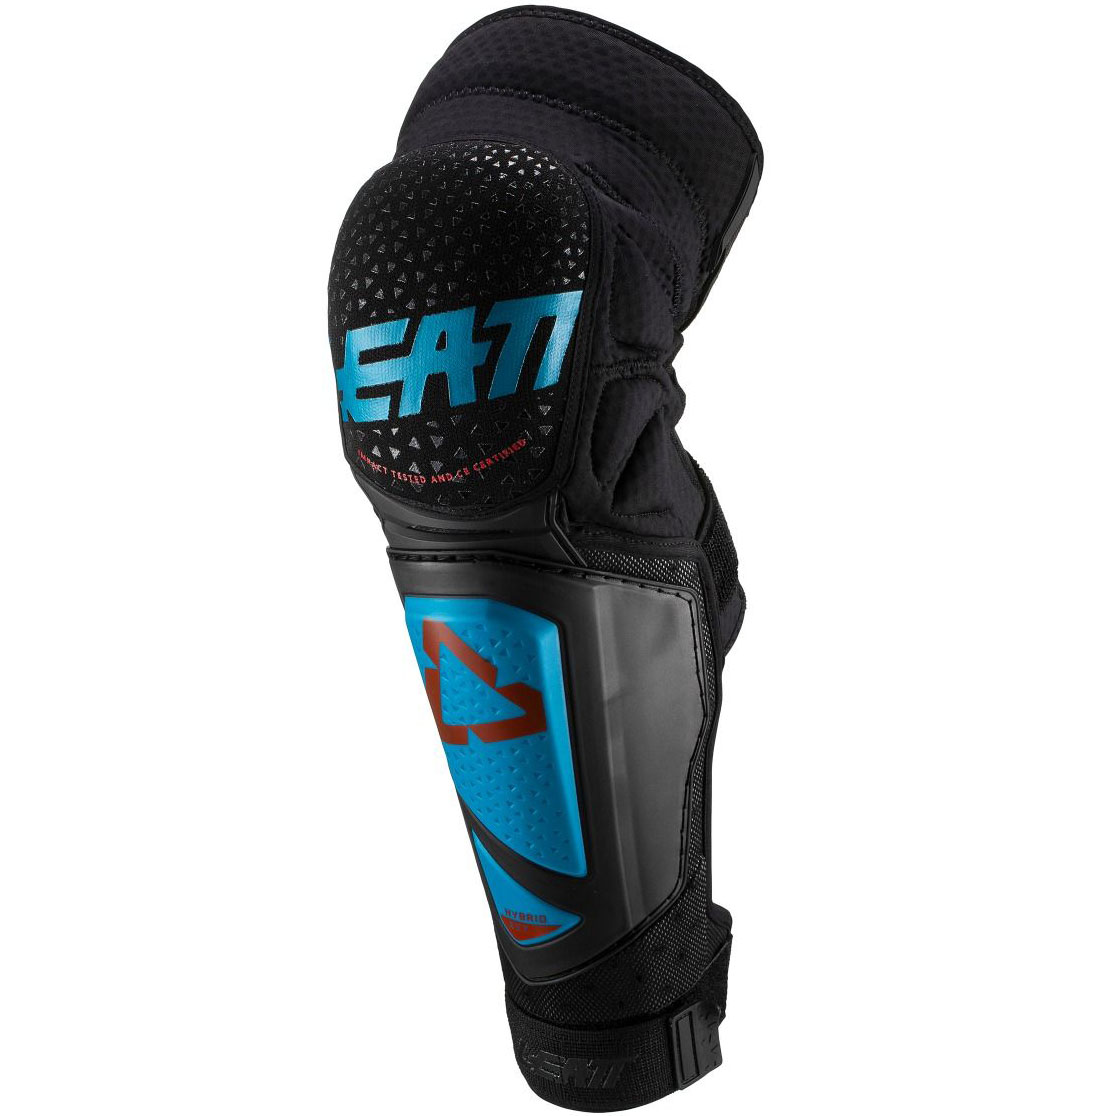 Leatt 3DF Hybrid EXT Knee & Shin Guard Black/Fuel защита колен